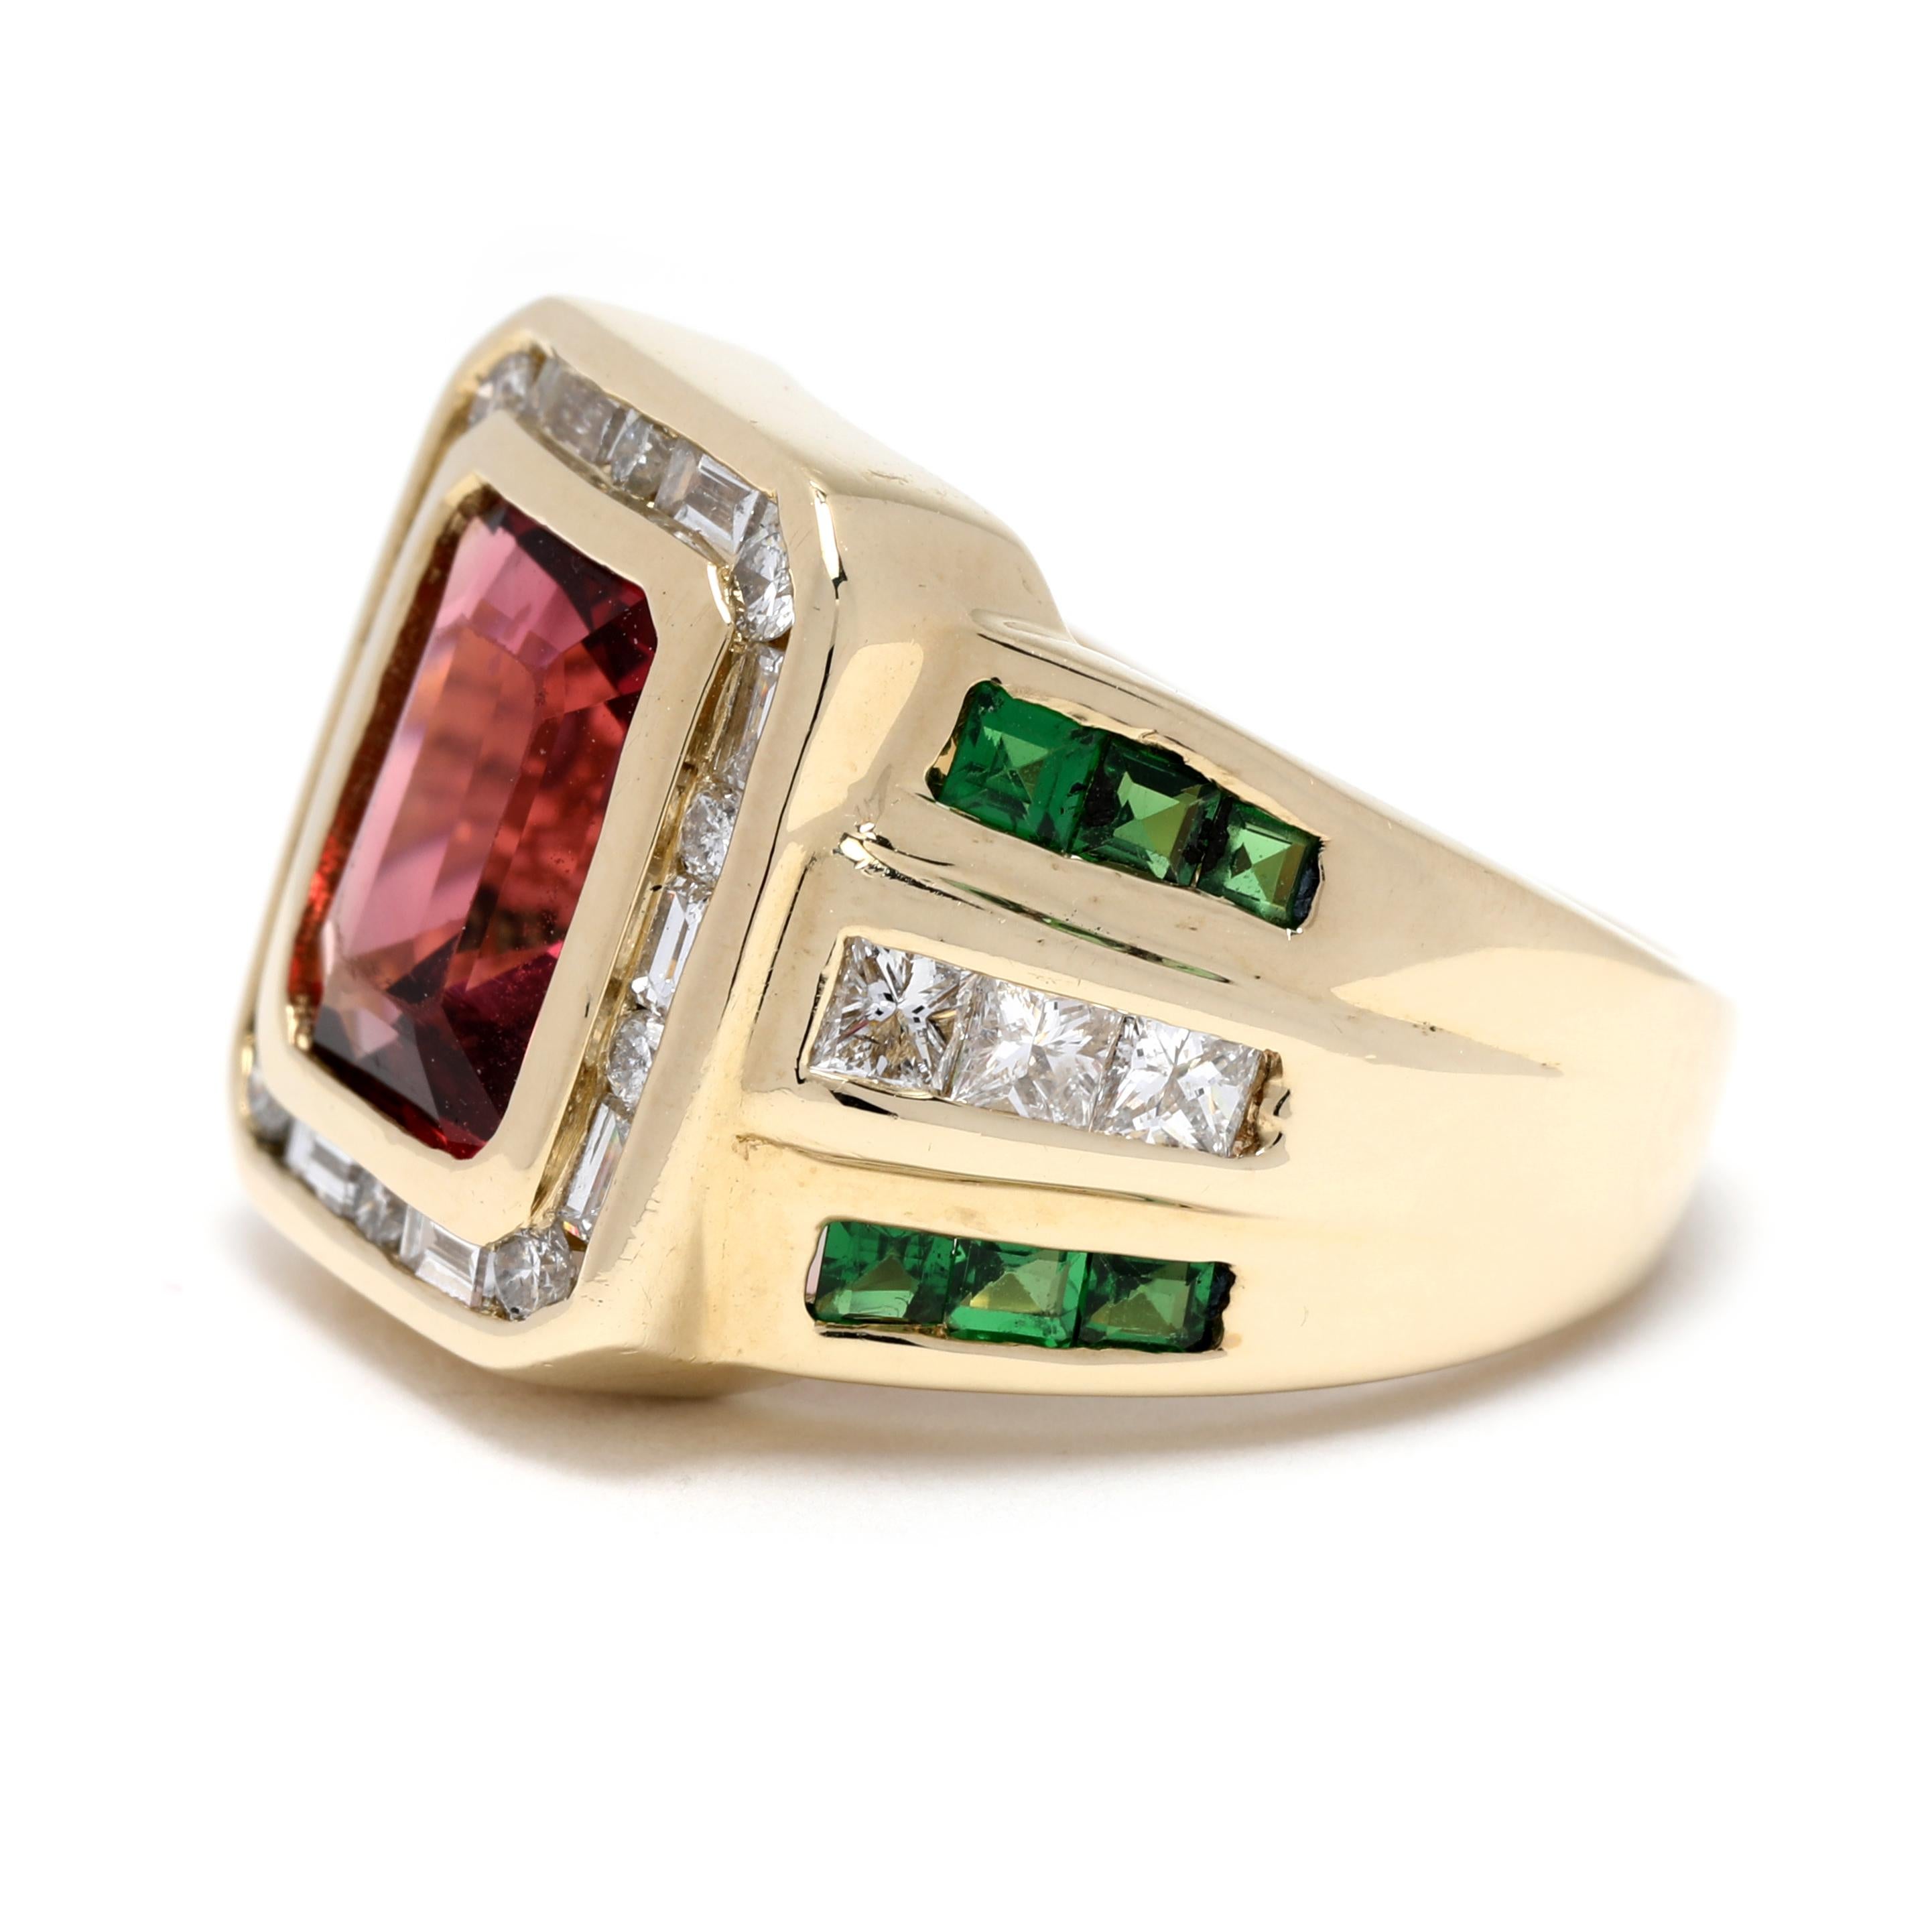 Emerald Cut 5.5ctw Pink Tourmaline Diamond Tsavorite Garnet Ring, 14k YG, Ring